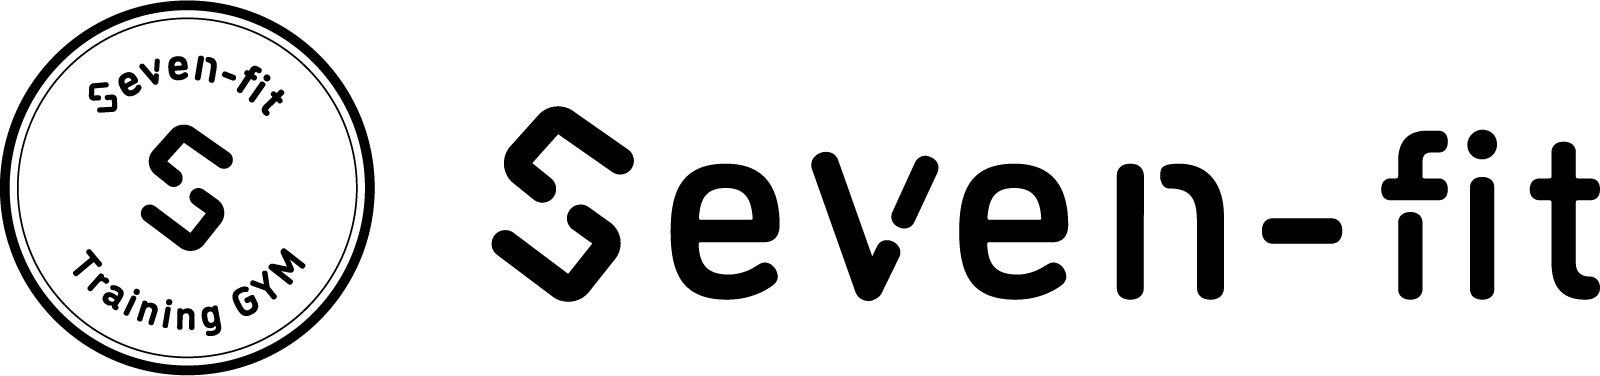 Seven-fit_logo